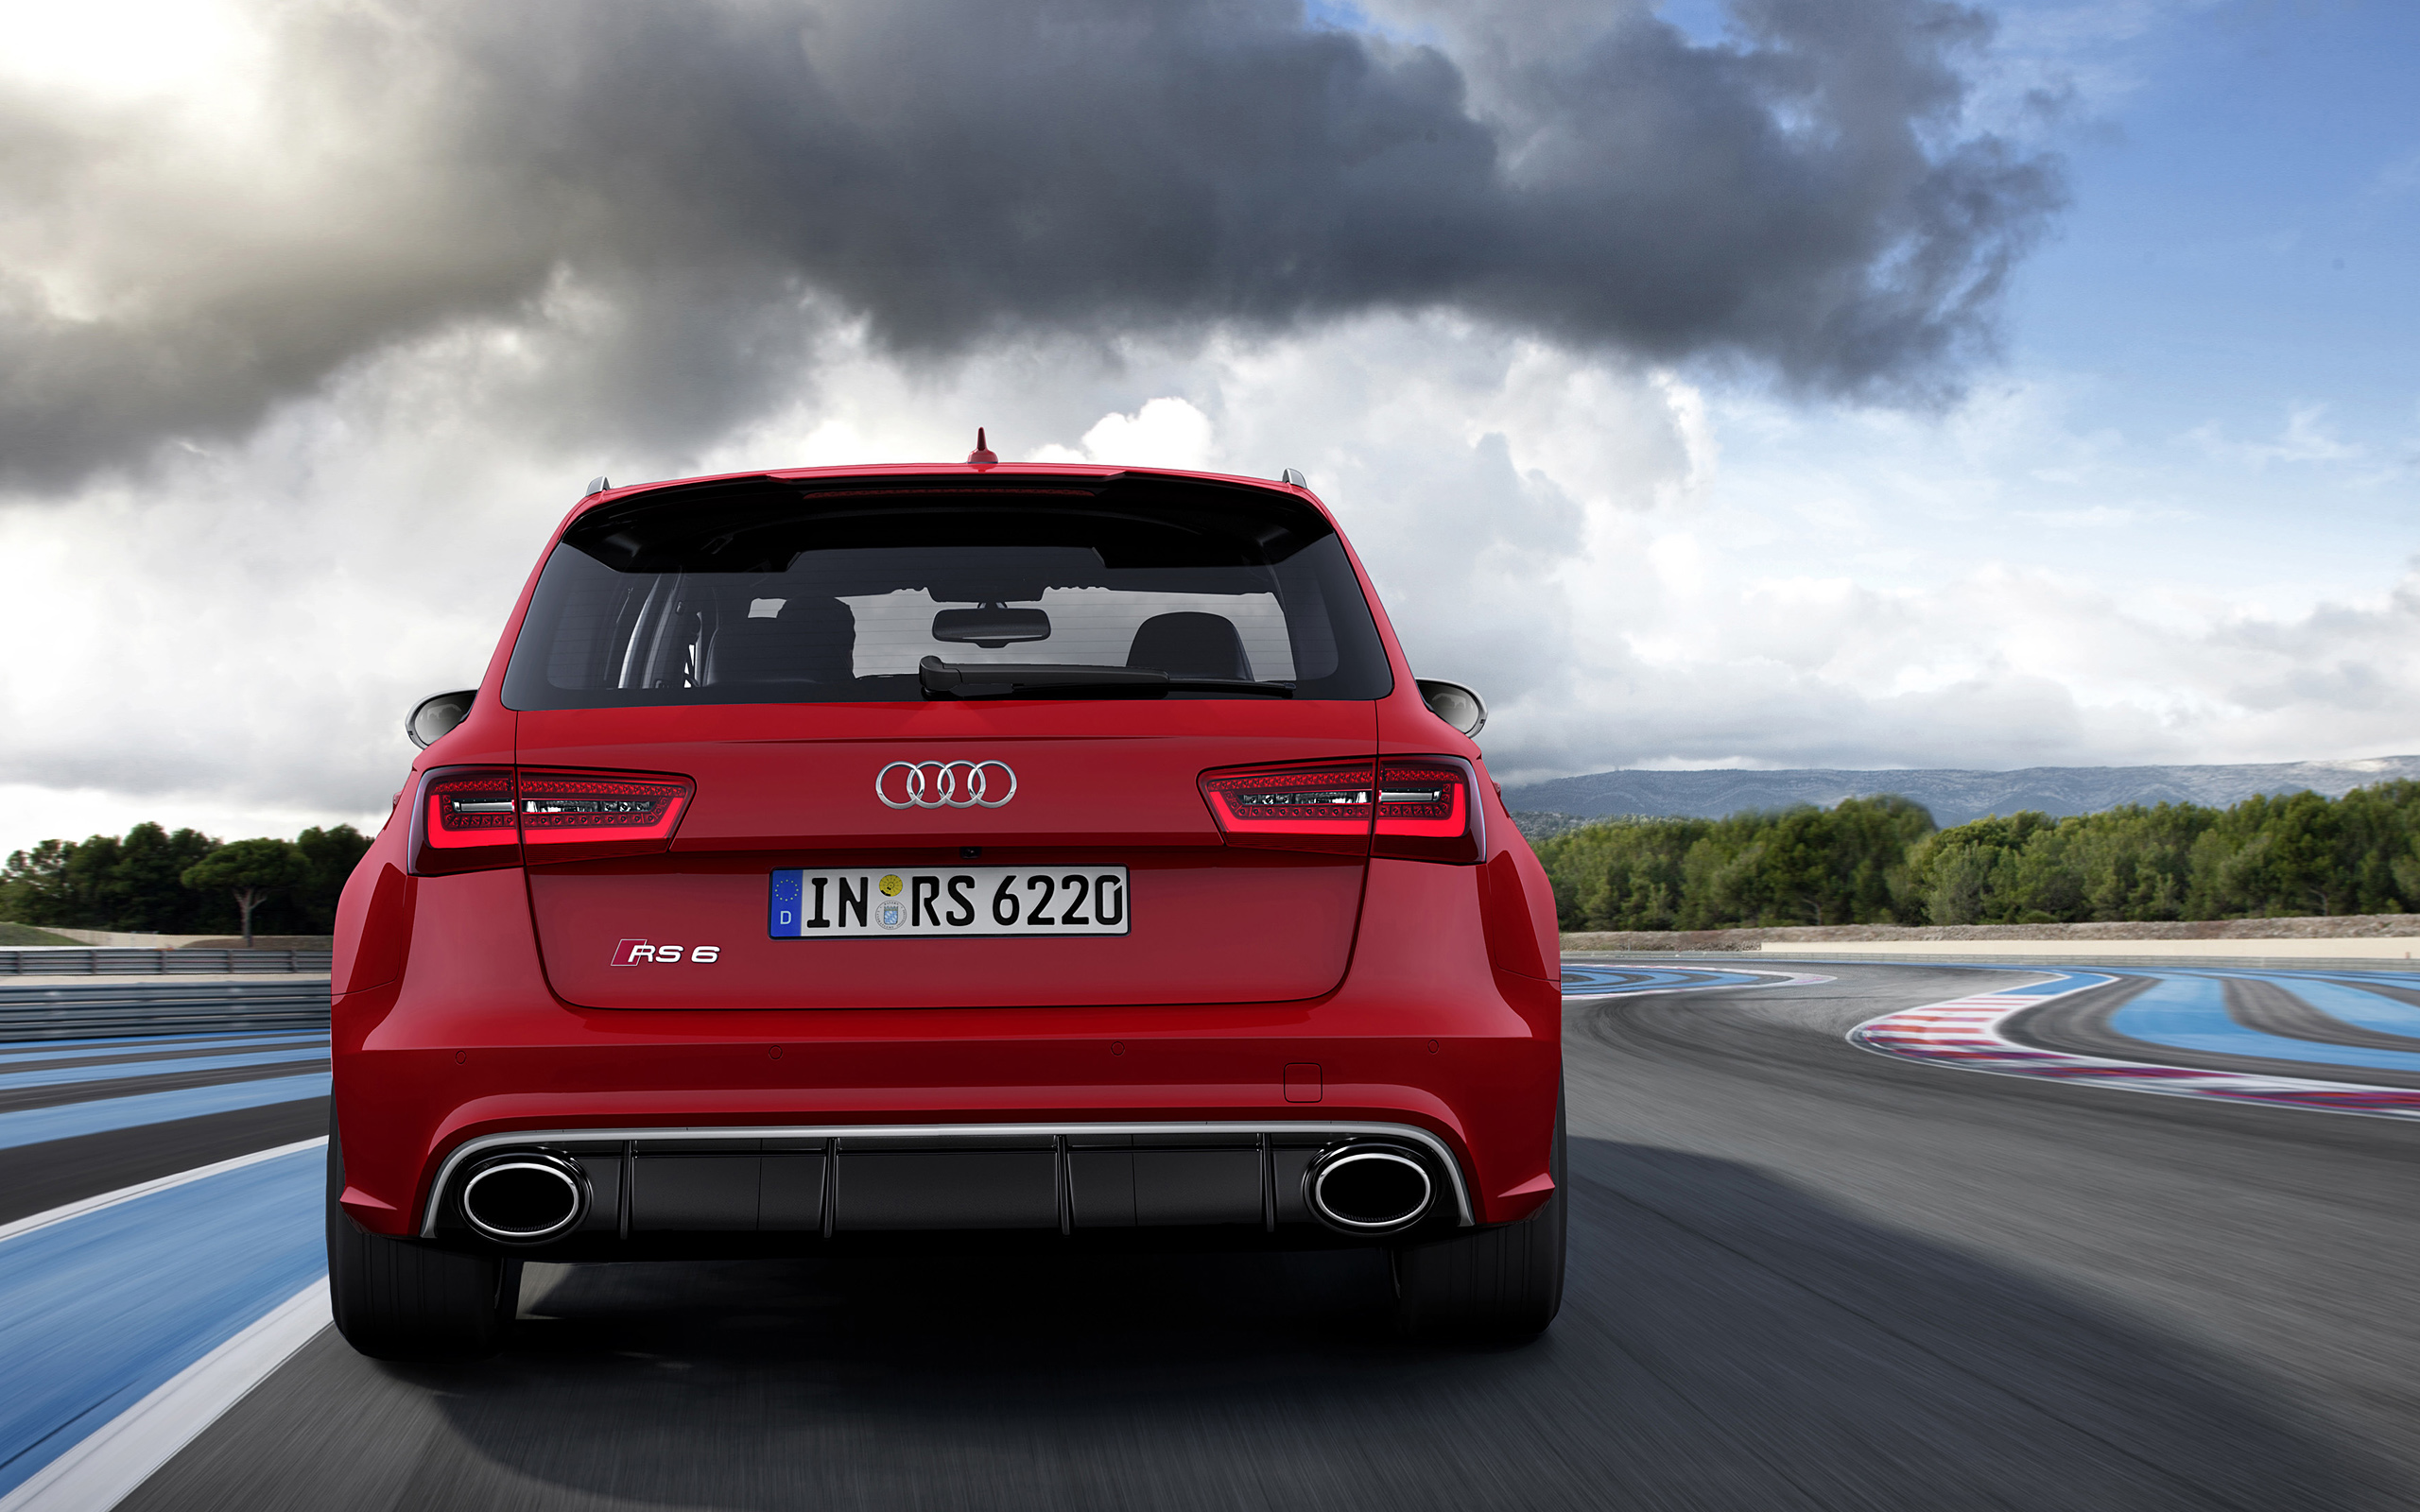 Descarga gratuita de fondo de pantalla para móvil de Audi Rs6, Audi, Vehículos.